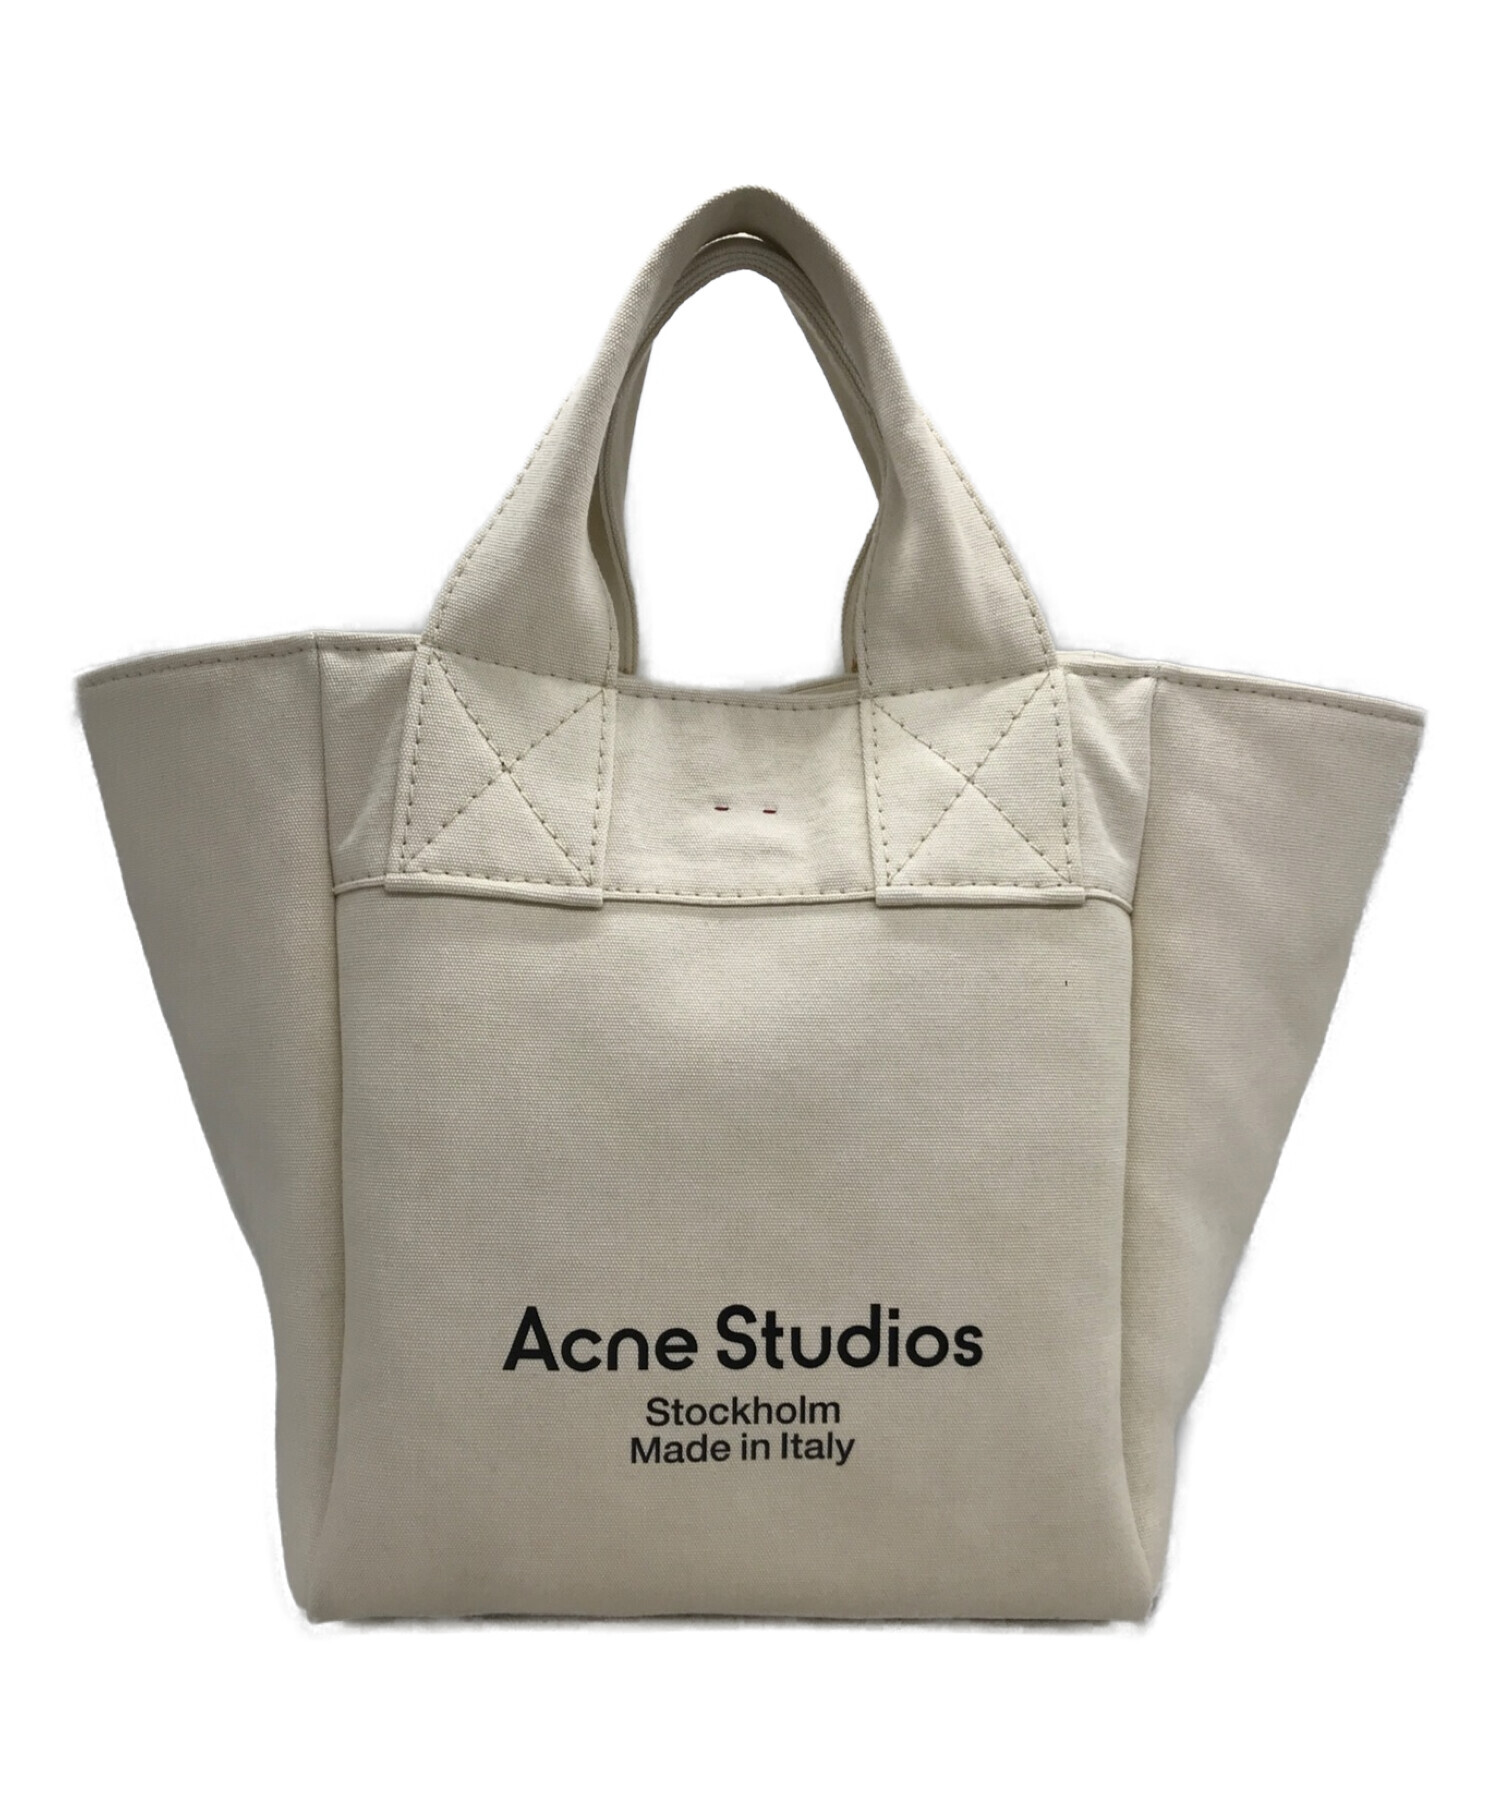 Acne Studios LARGE CANVAS SHOPPER Bagモデル名LA - トートバッグ